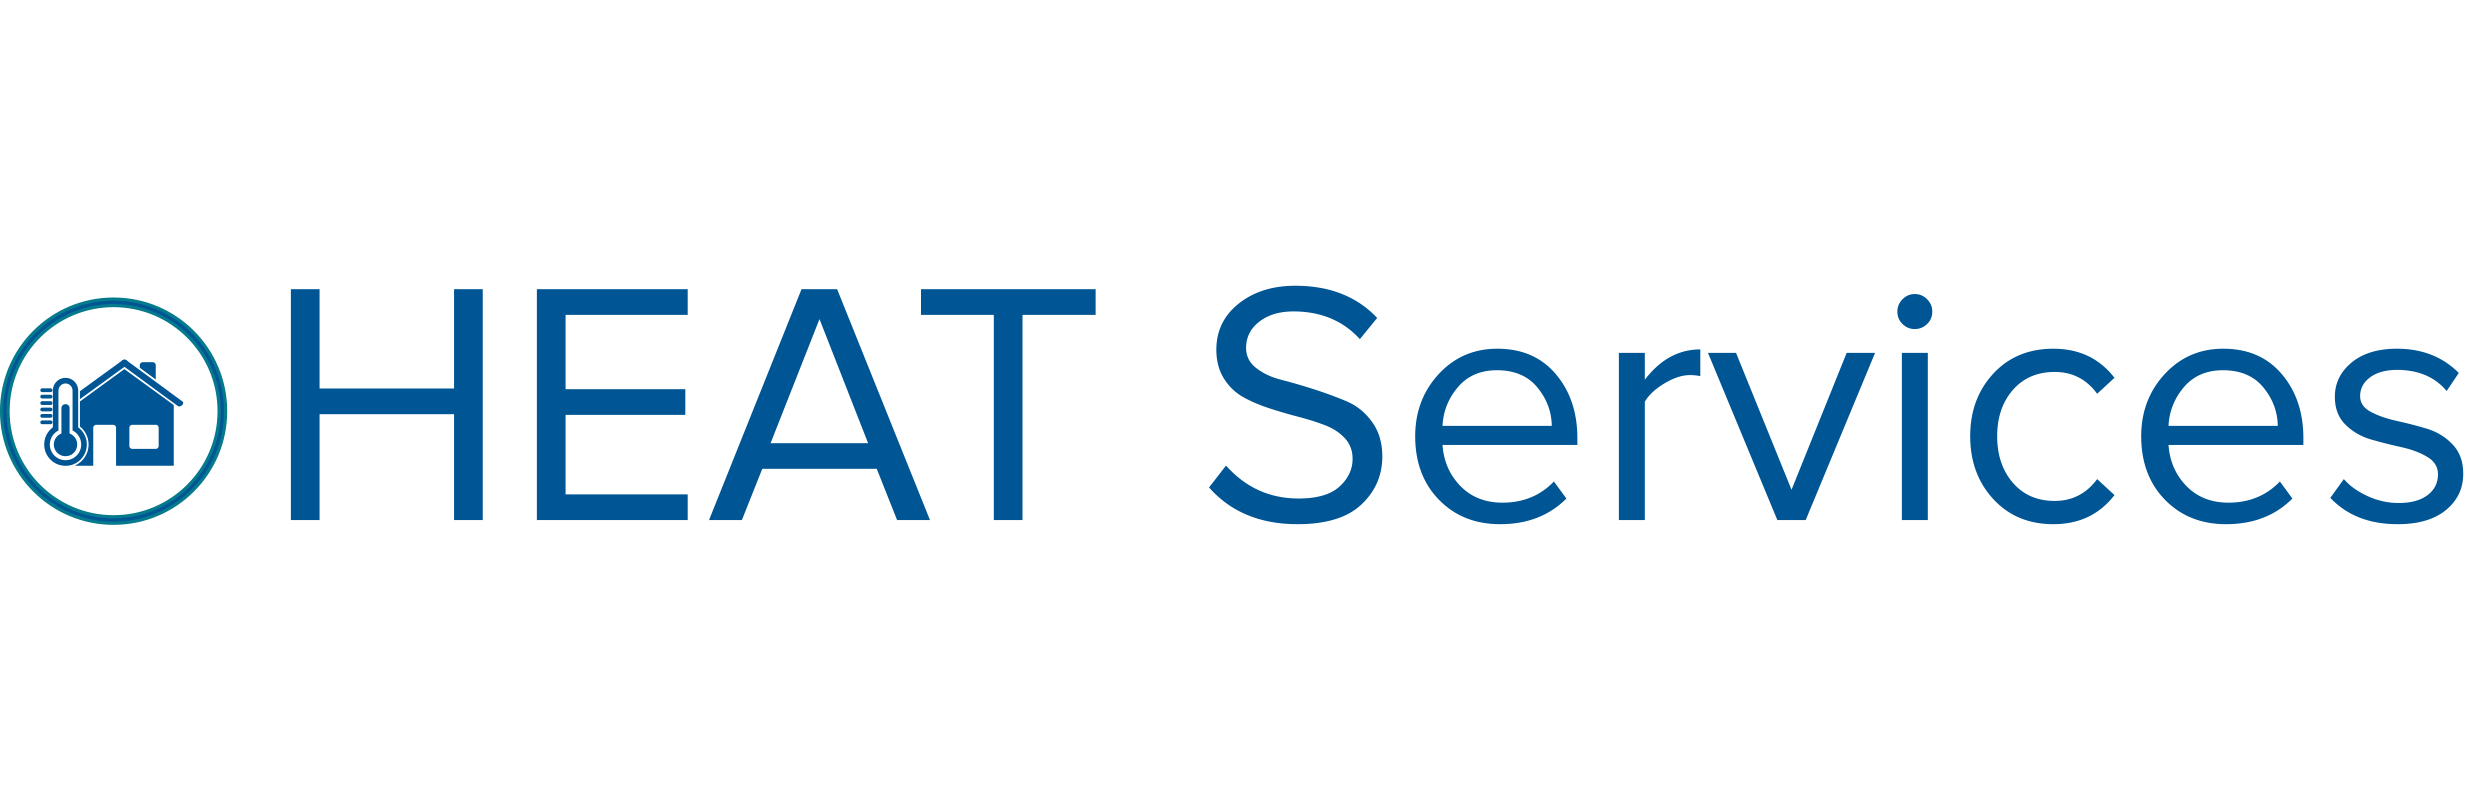 Heat Services Logo  